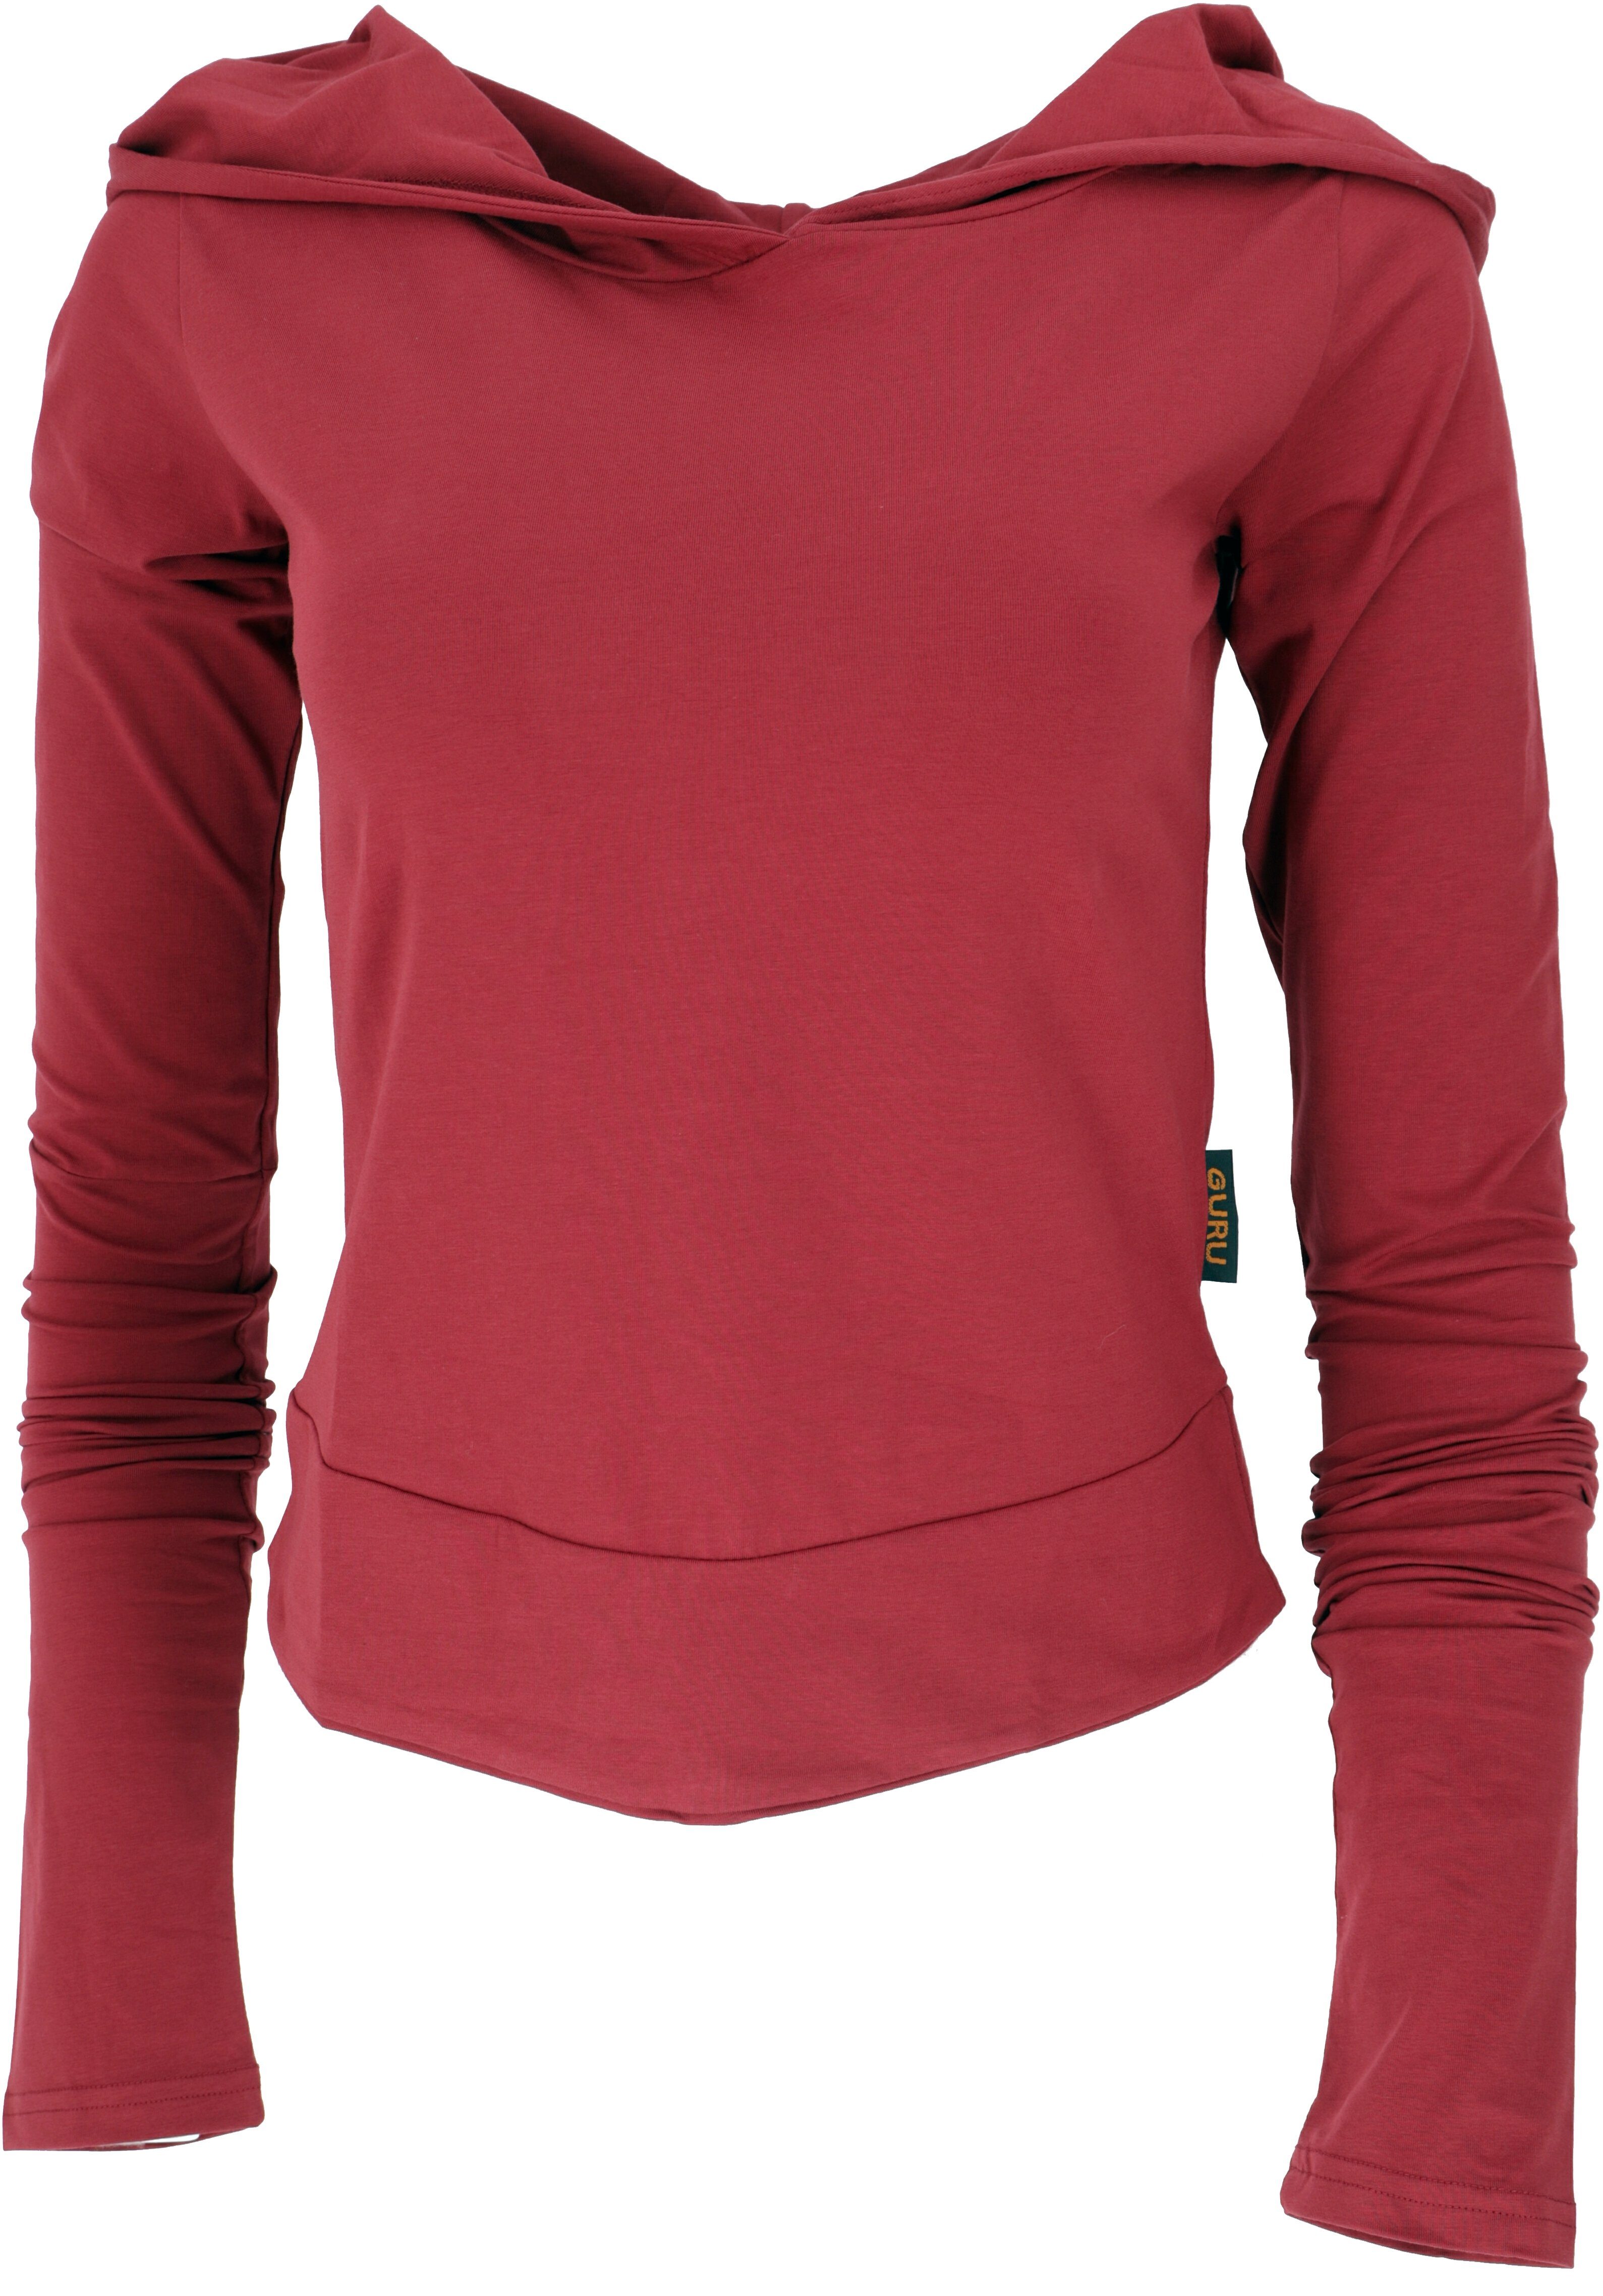 Guru-Shop Longsleeve Langarmshirt aus Biobaumwolle mit überlangen.. alternative Bekleidung rot